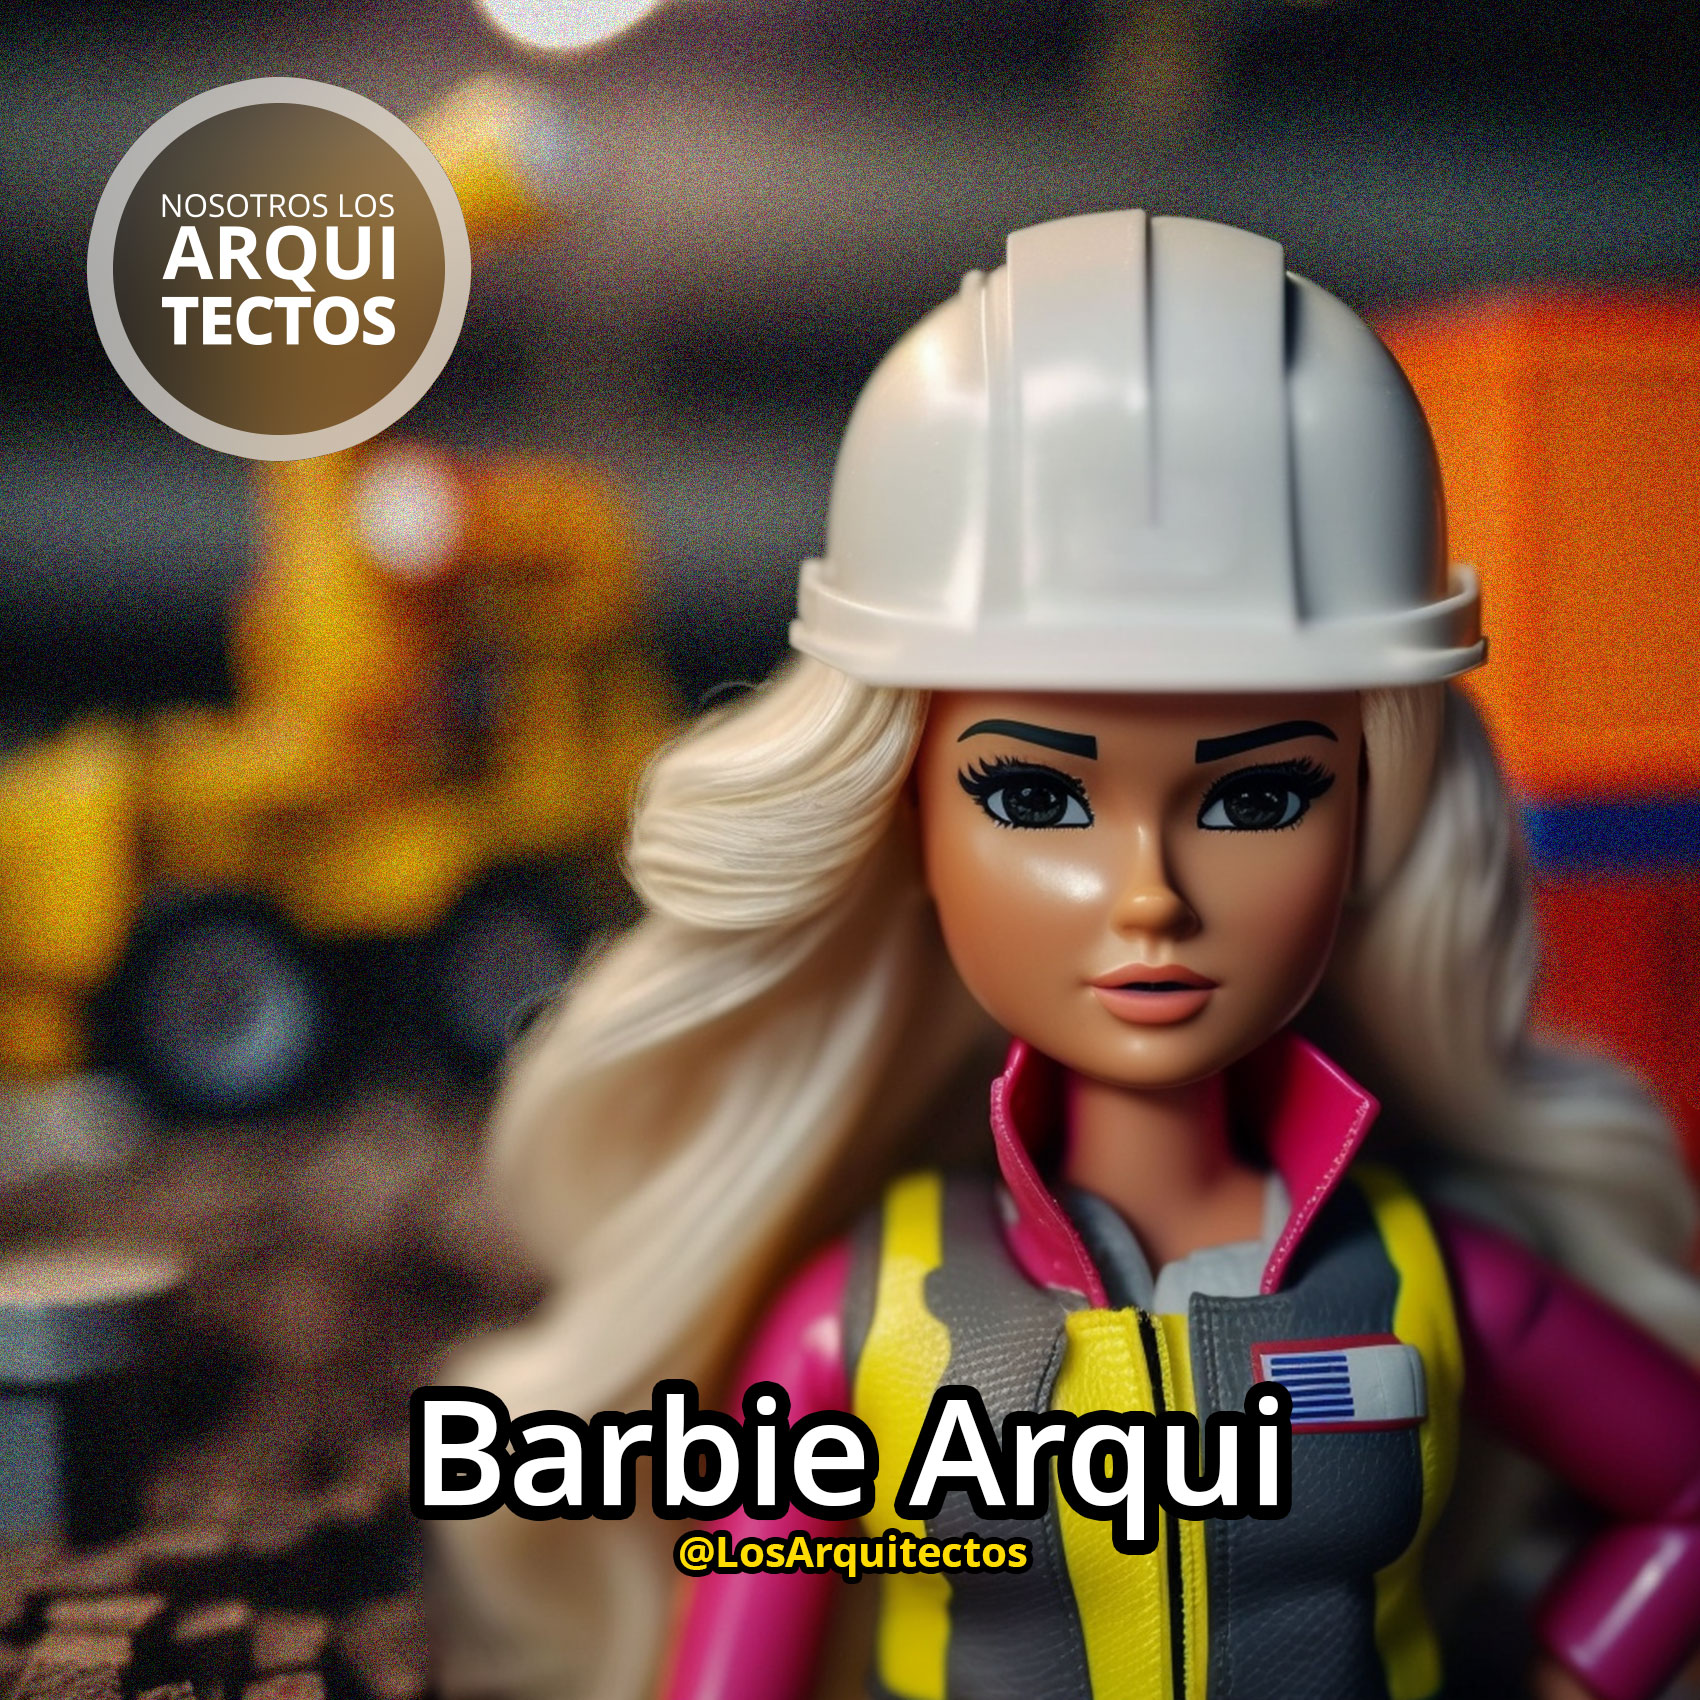 Barbie Arqui